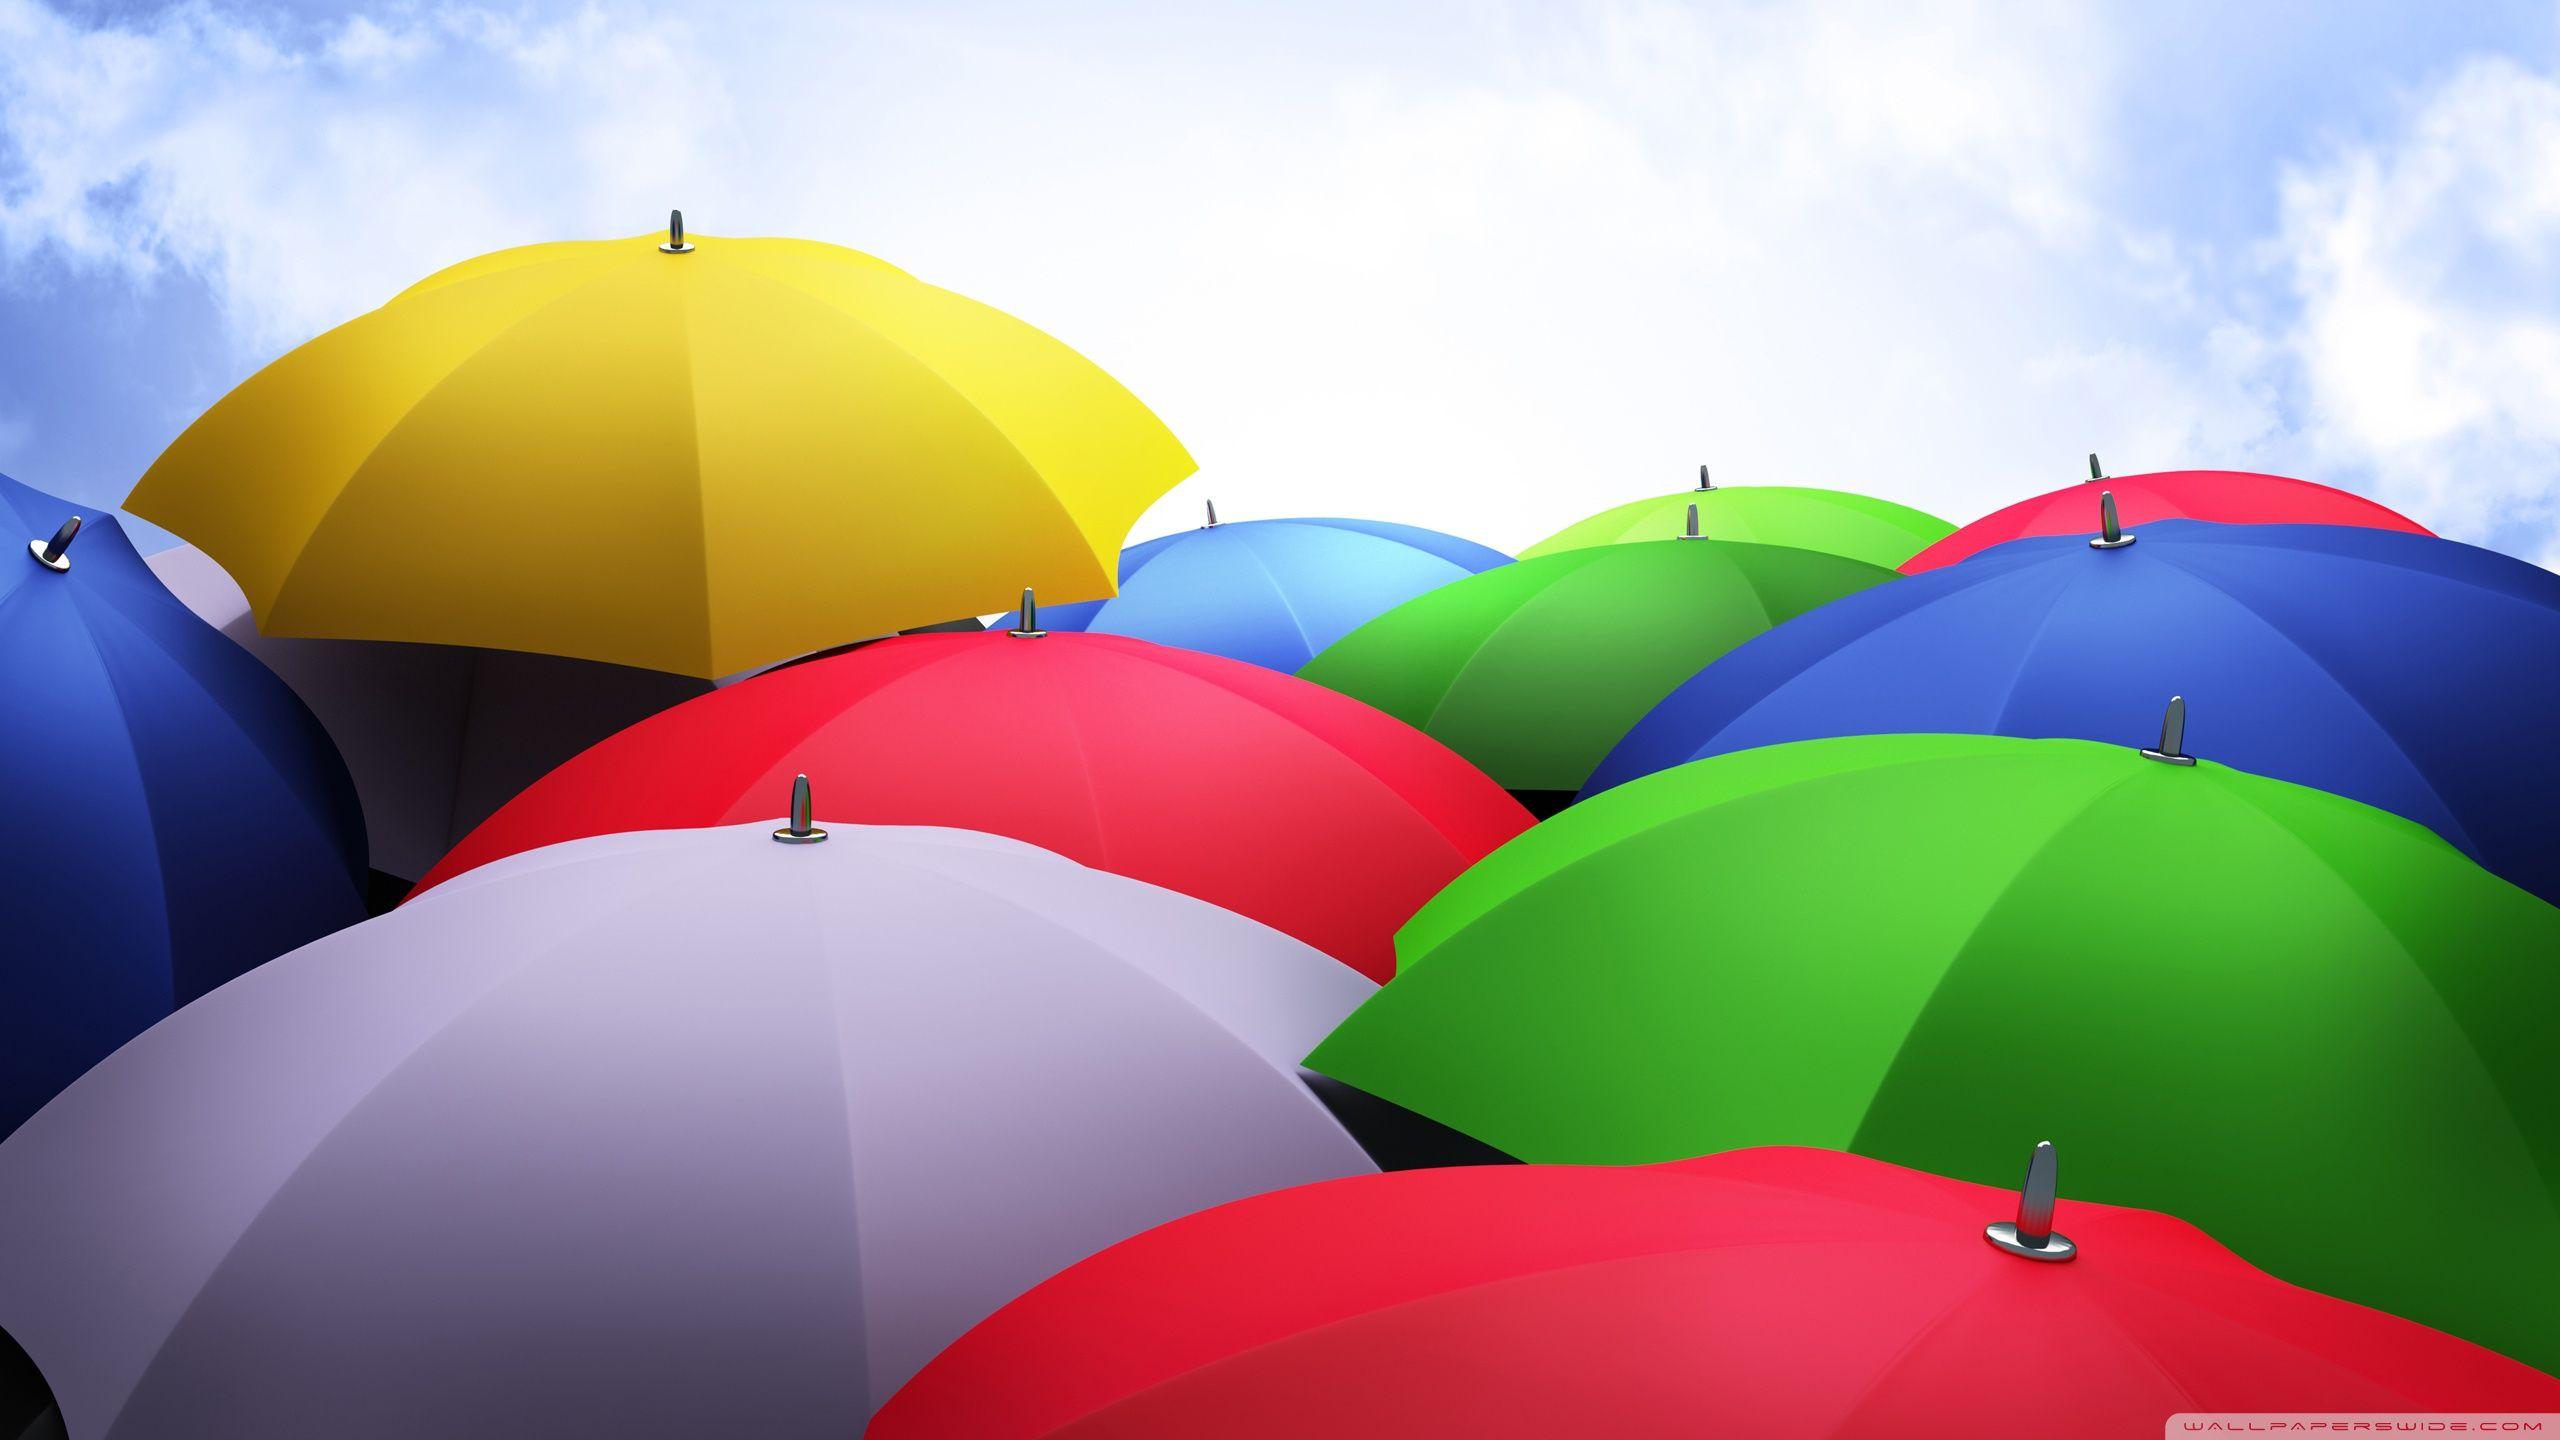 Colorful Umbrellas ❤ 4K HD Desktop Wallpaper for 4K Ultra HD TV